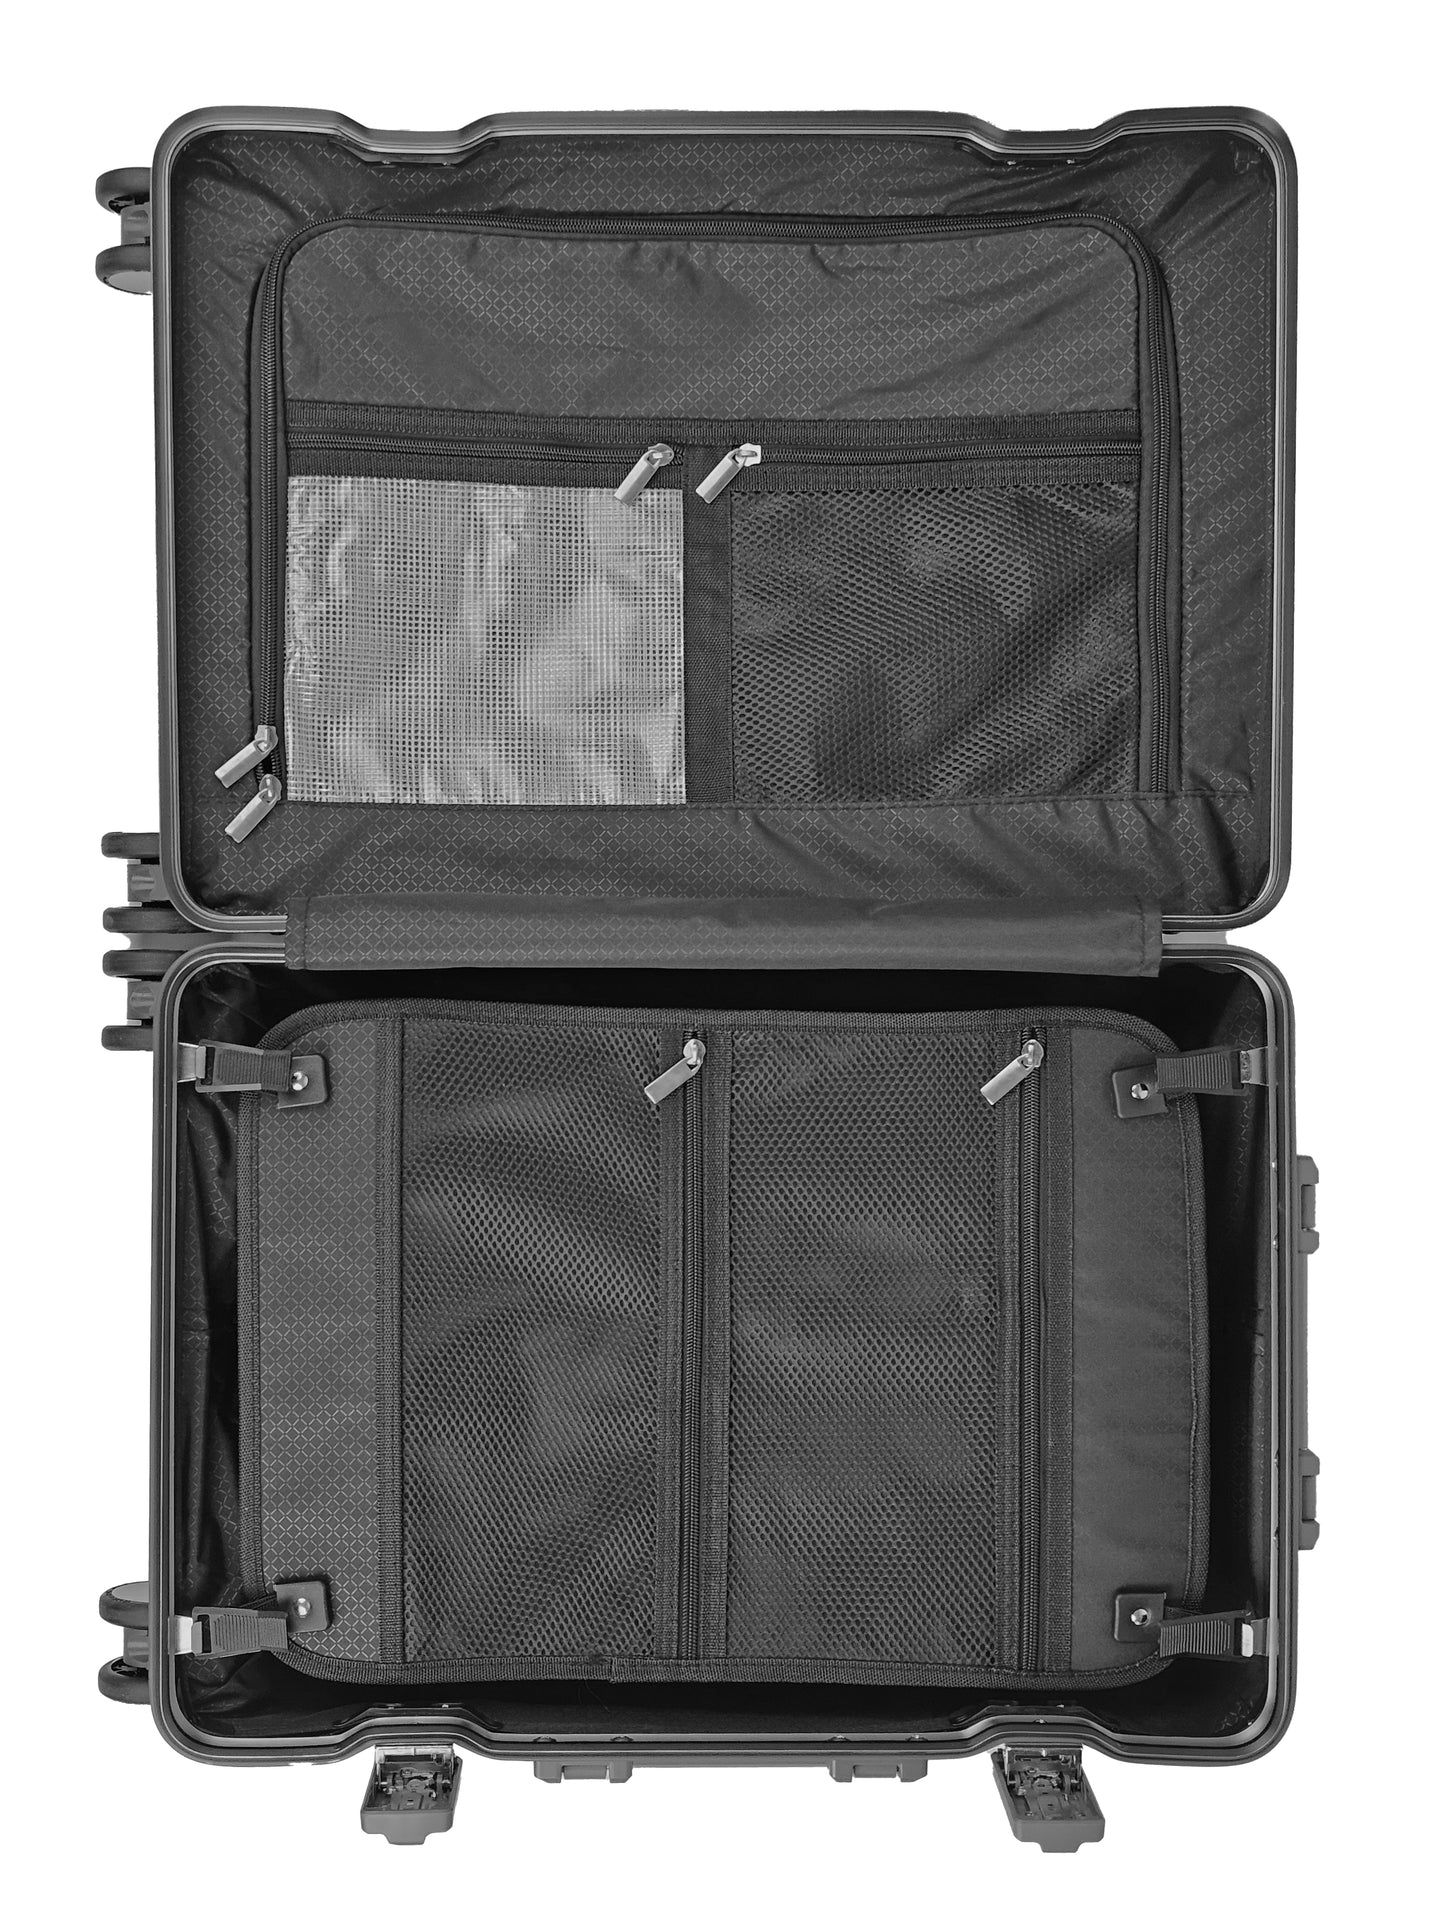 GLX2 All Aluminum Luggage 3 Sizes (20",26",28") with TSA Lock Black